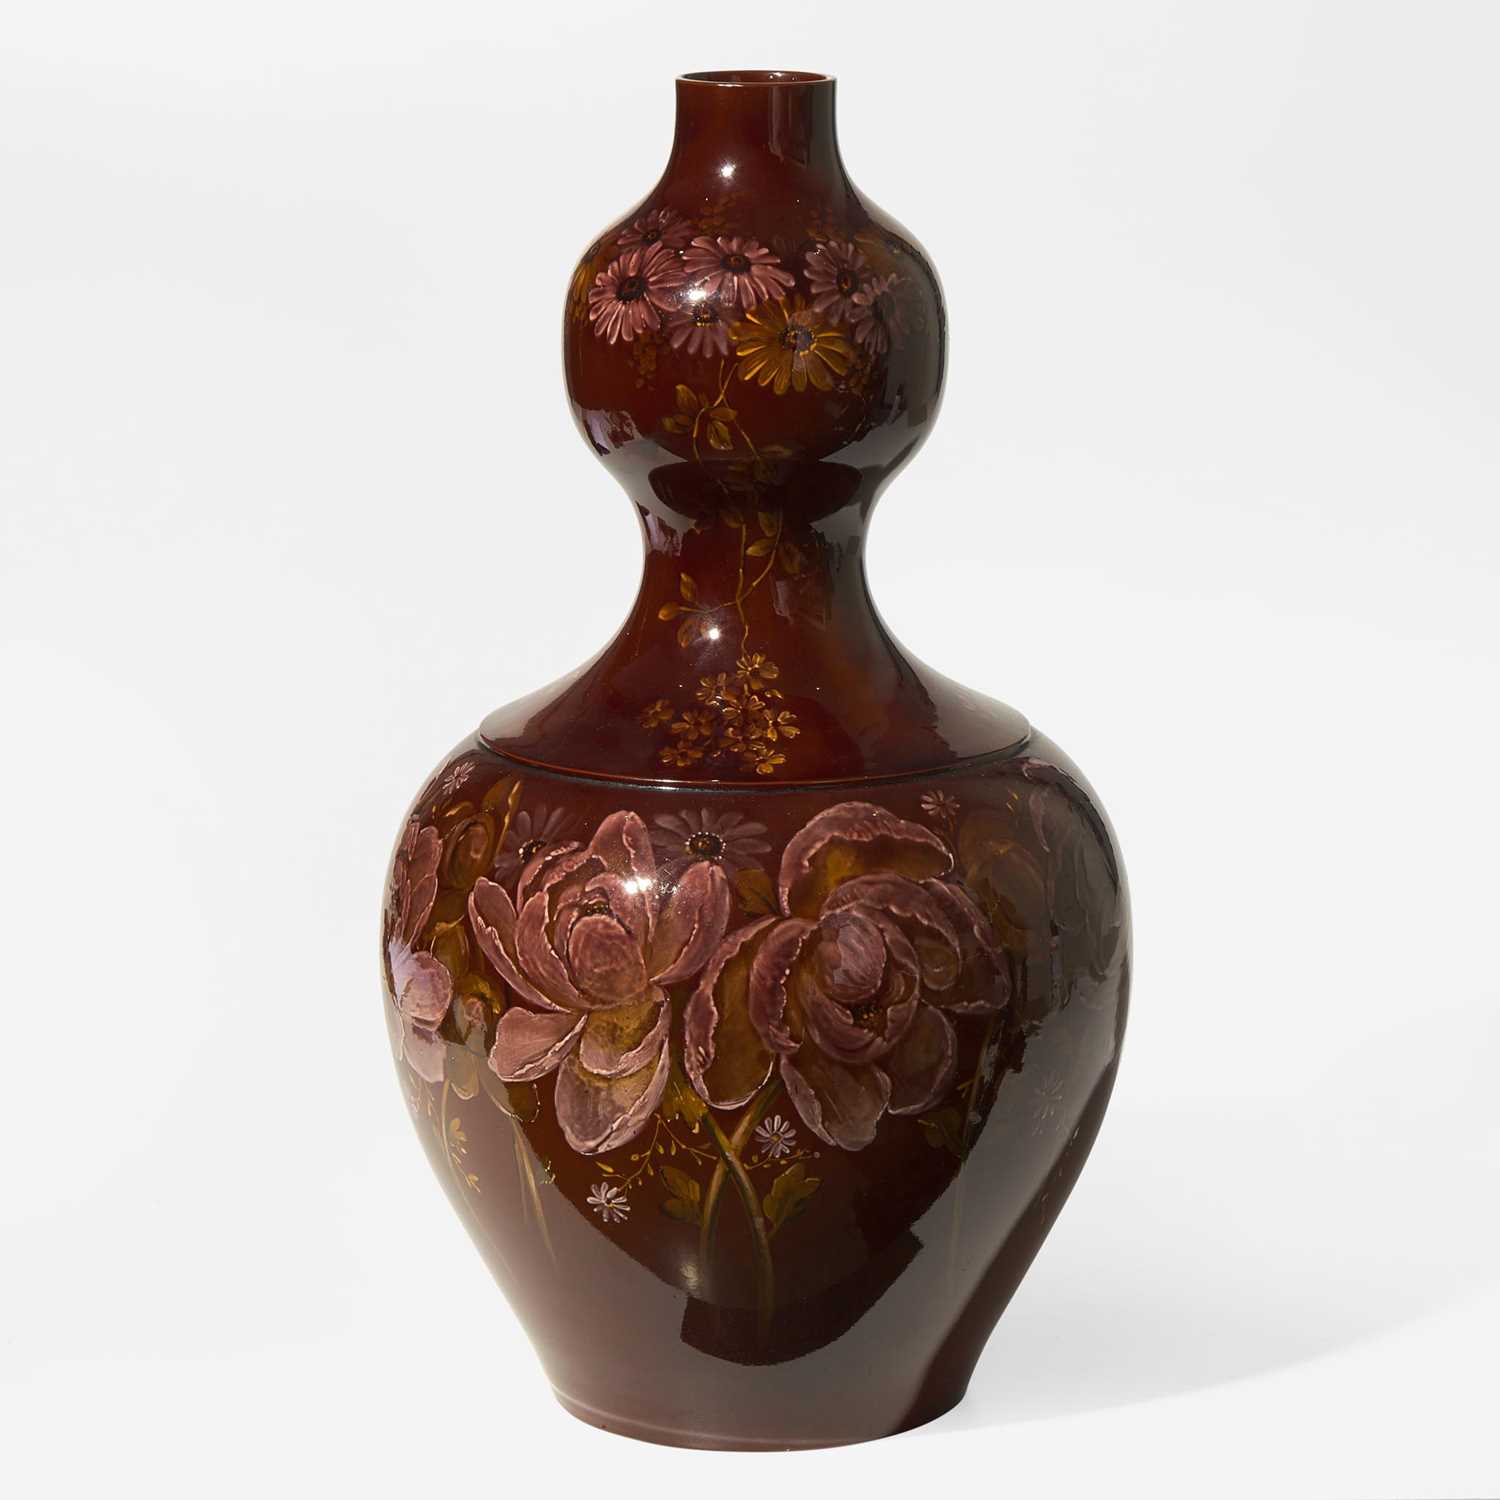 Lot 163 - A Monumental Wedgwood Magnolia Ware Vase